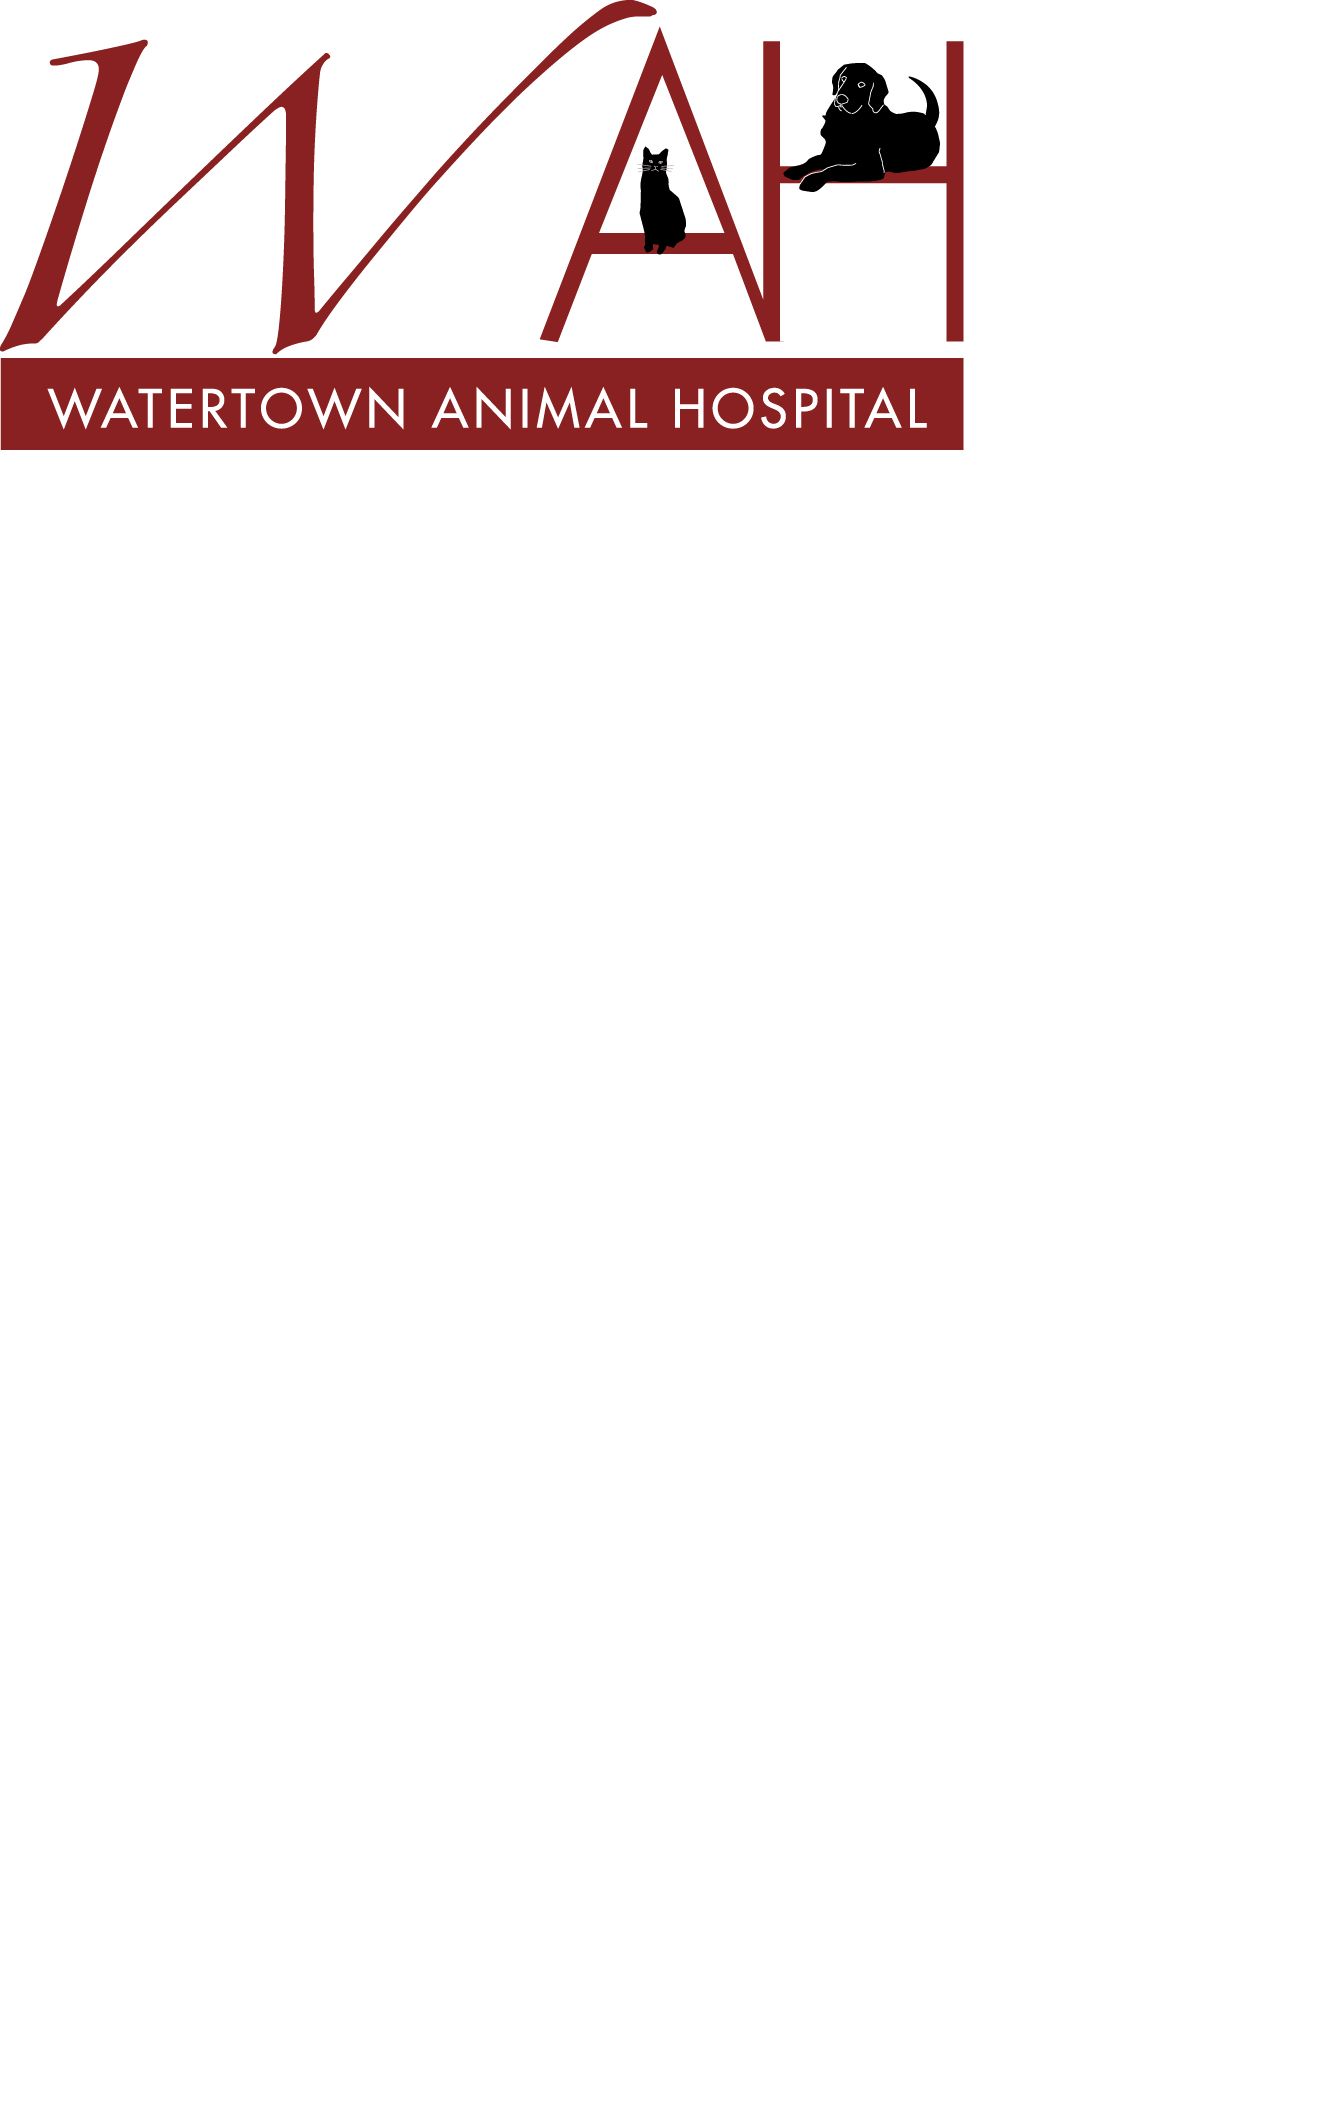 Watertown Animal Hospital